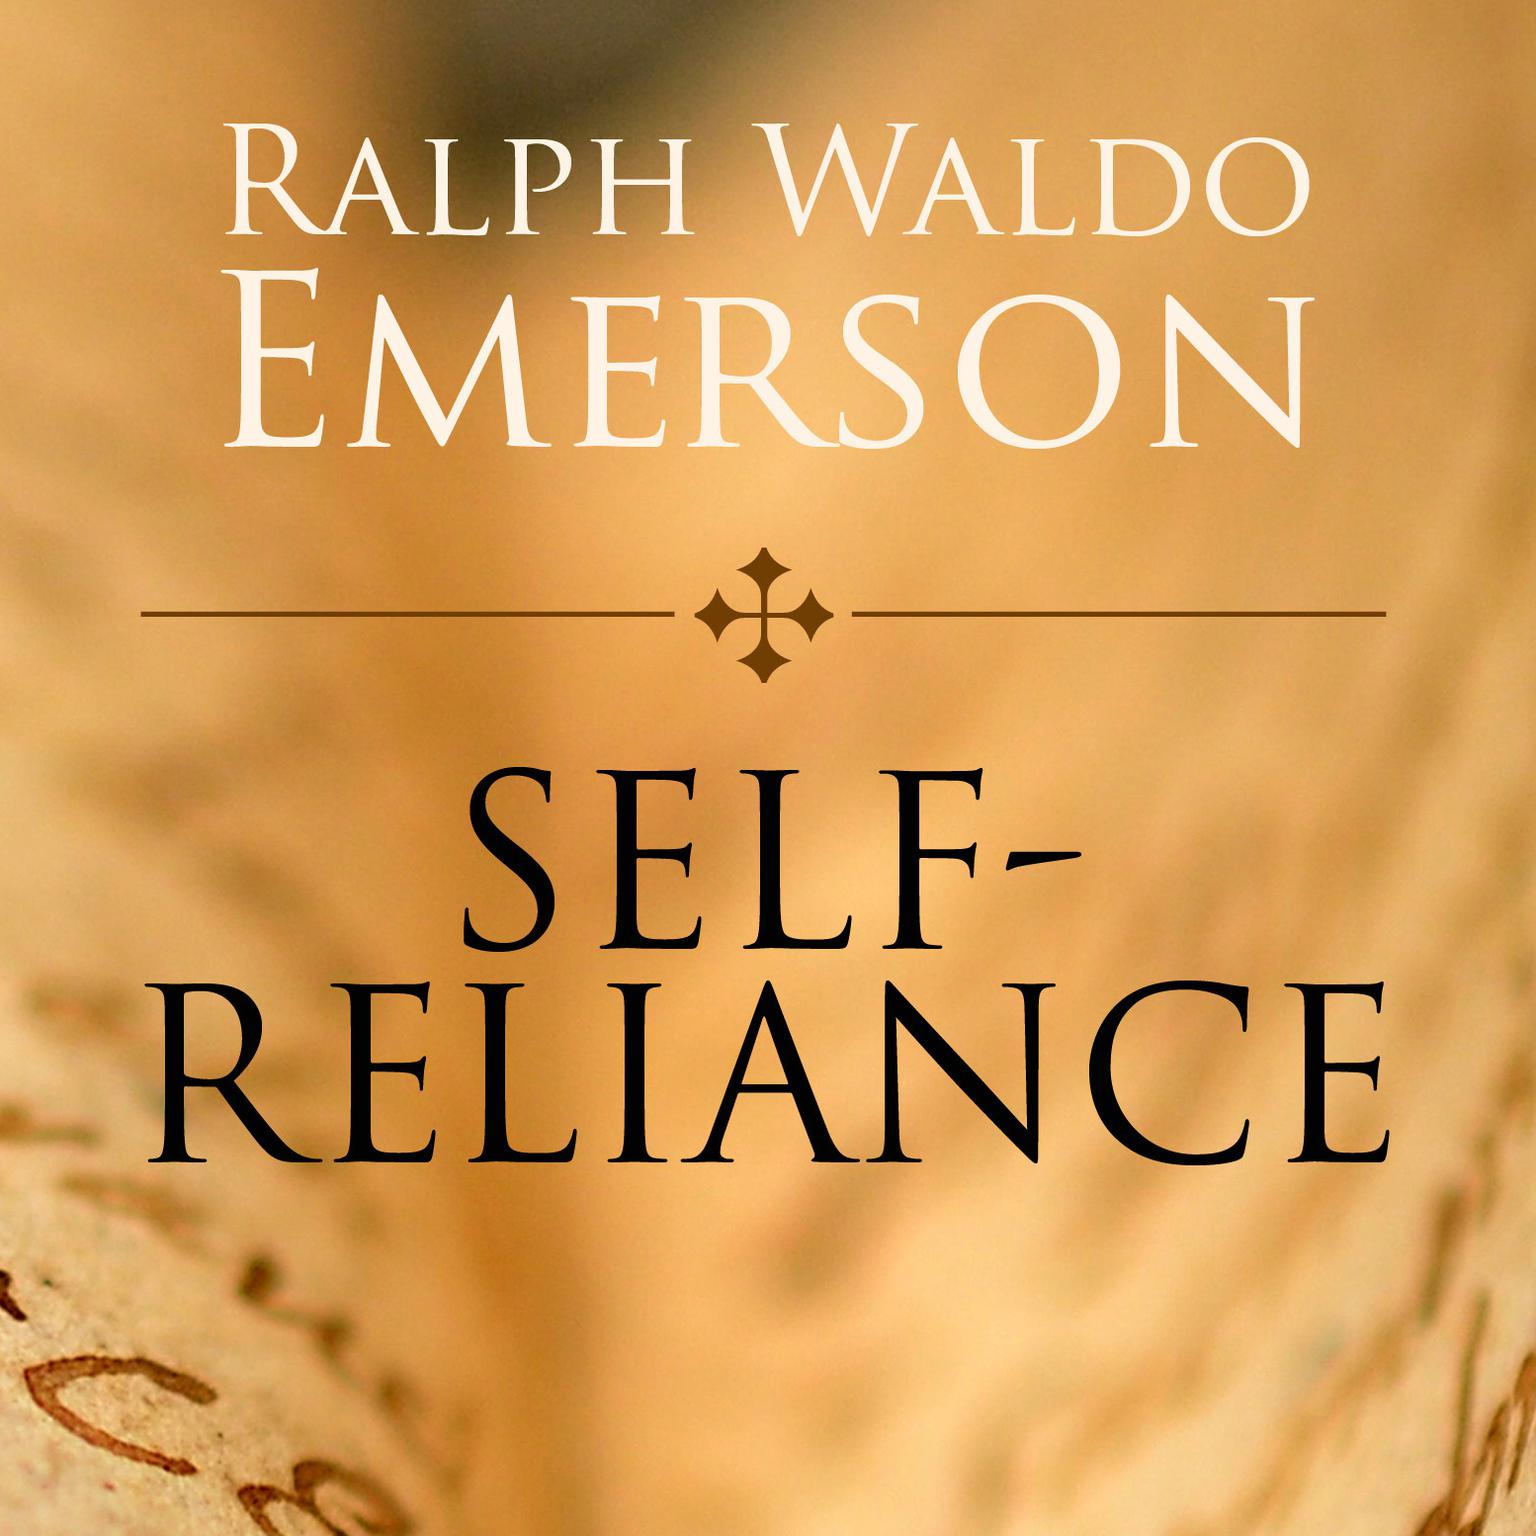 Self-Reliance Audiobook, by Ralph Waldo Emerson